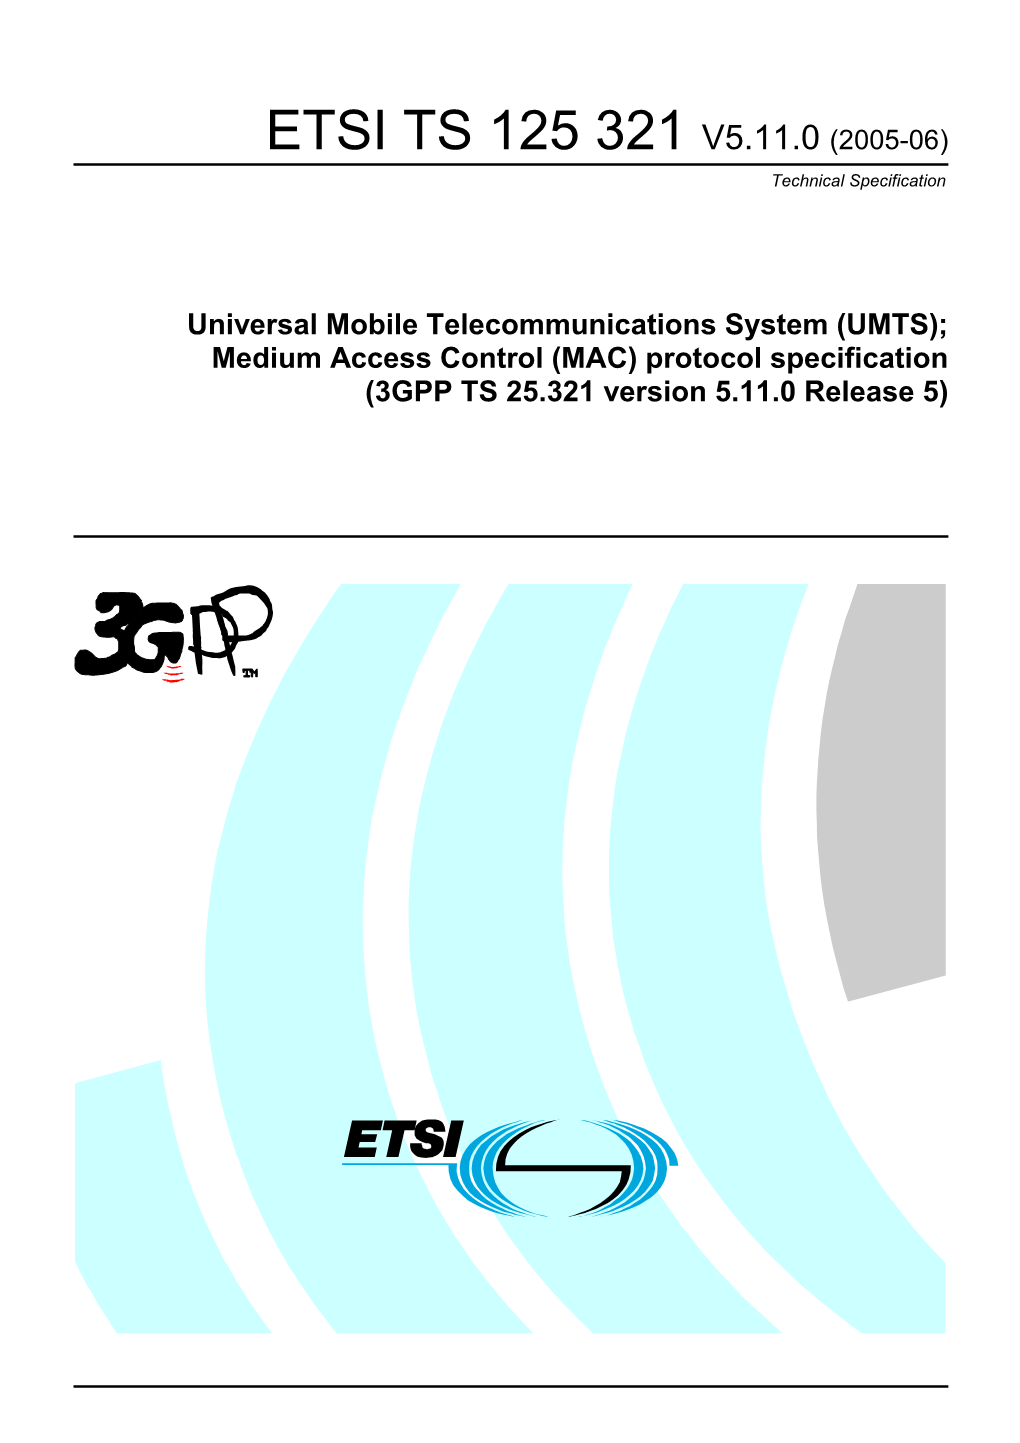 UMTS); Medium Access Control (MAC) Protocol Specification (3GPP TS 25.321 Version 5.11.0 Release 5)